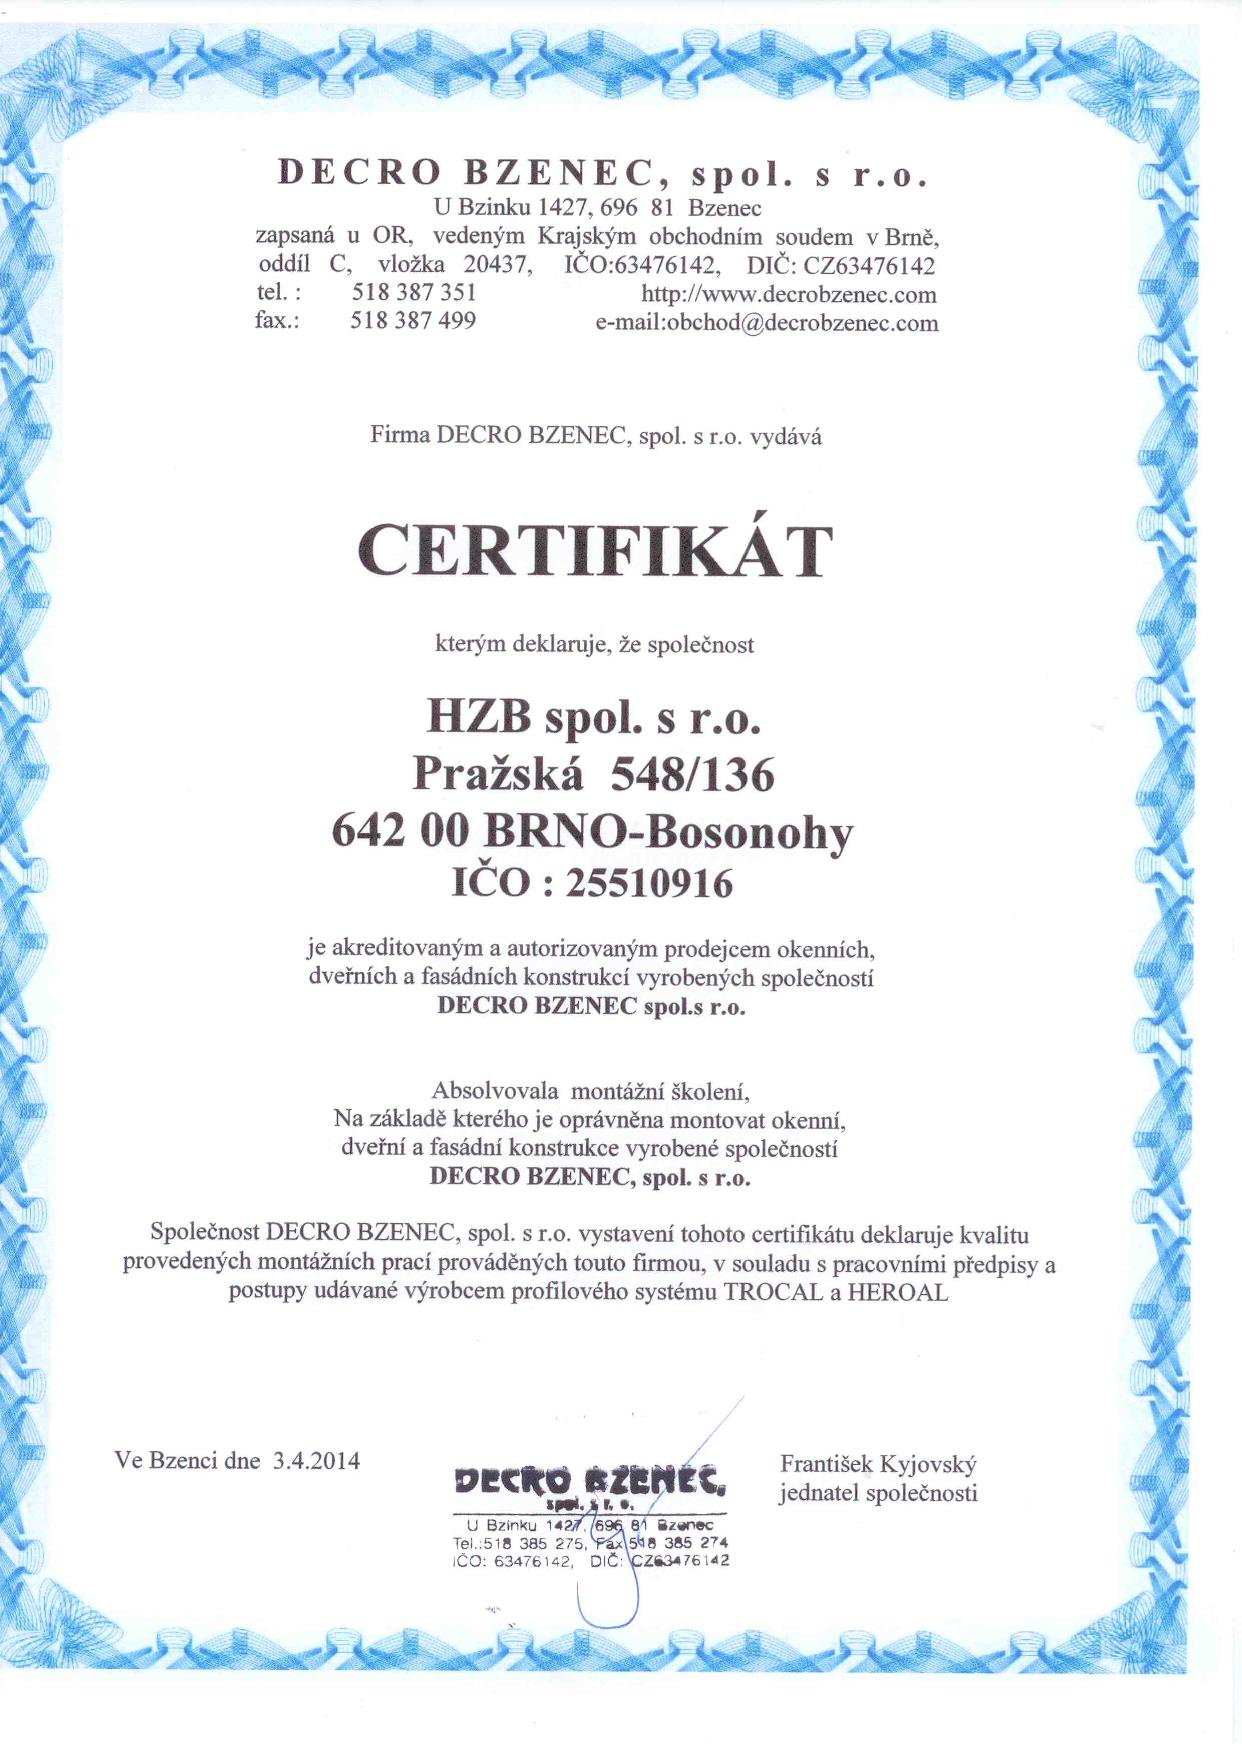 Certifikat-decro-bzenec